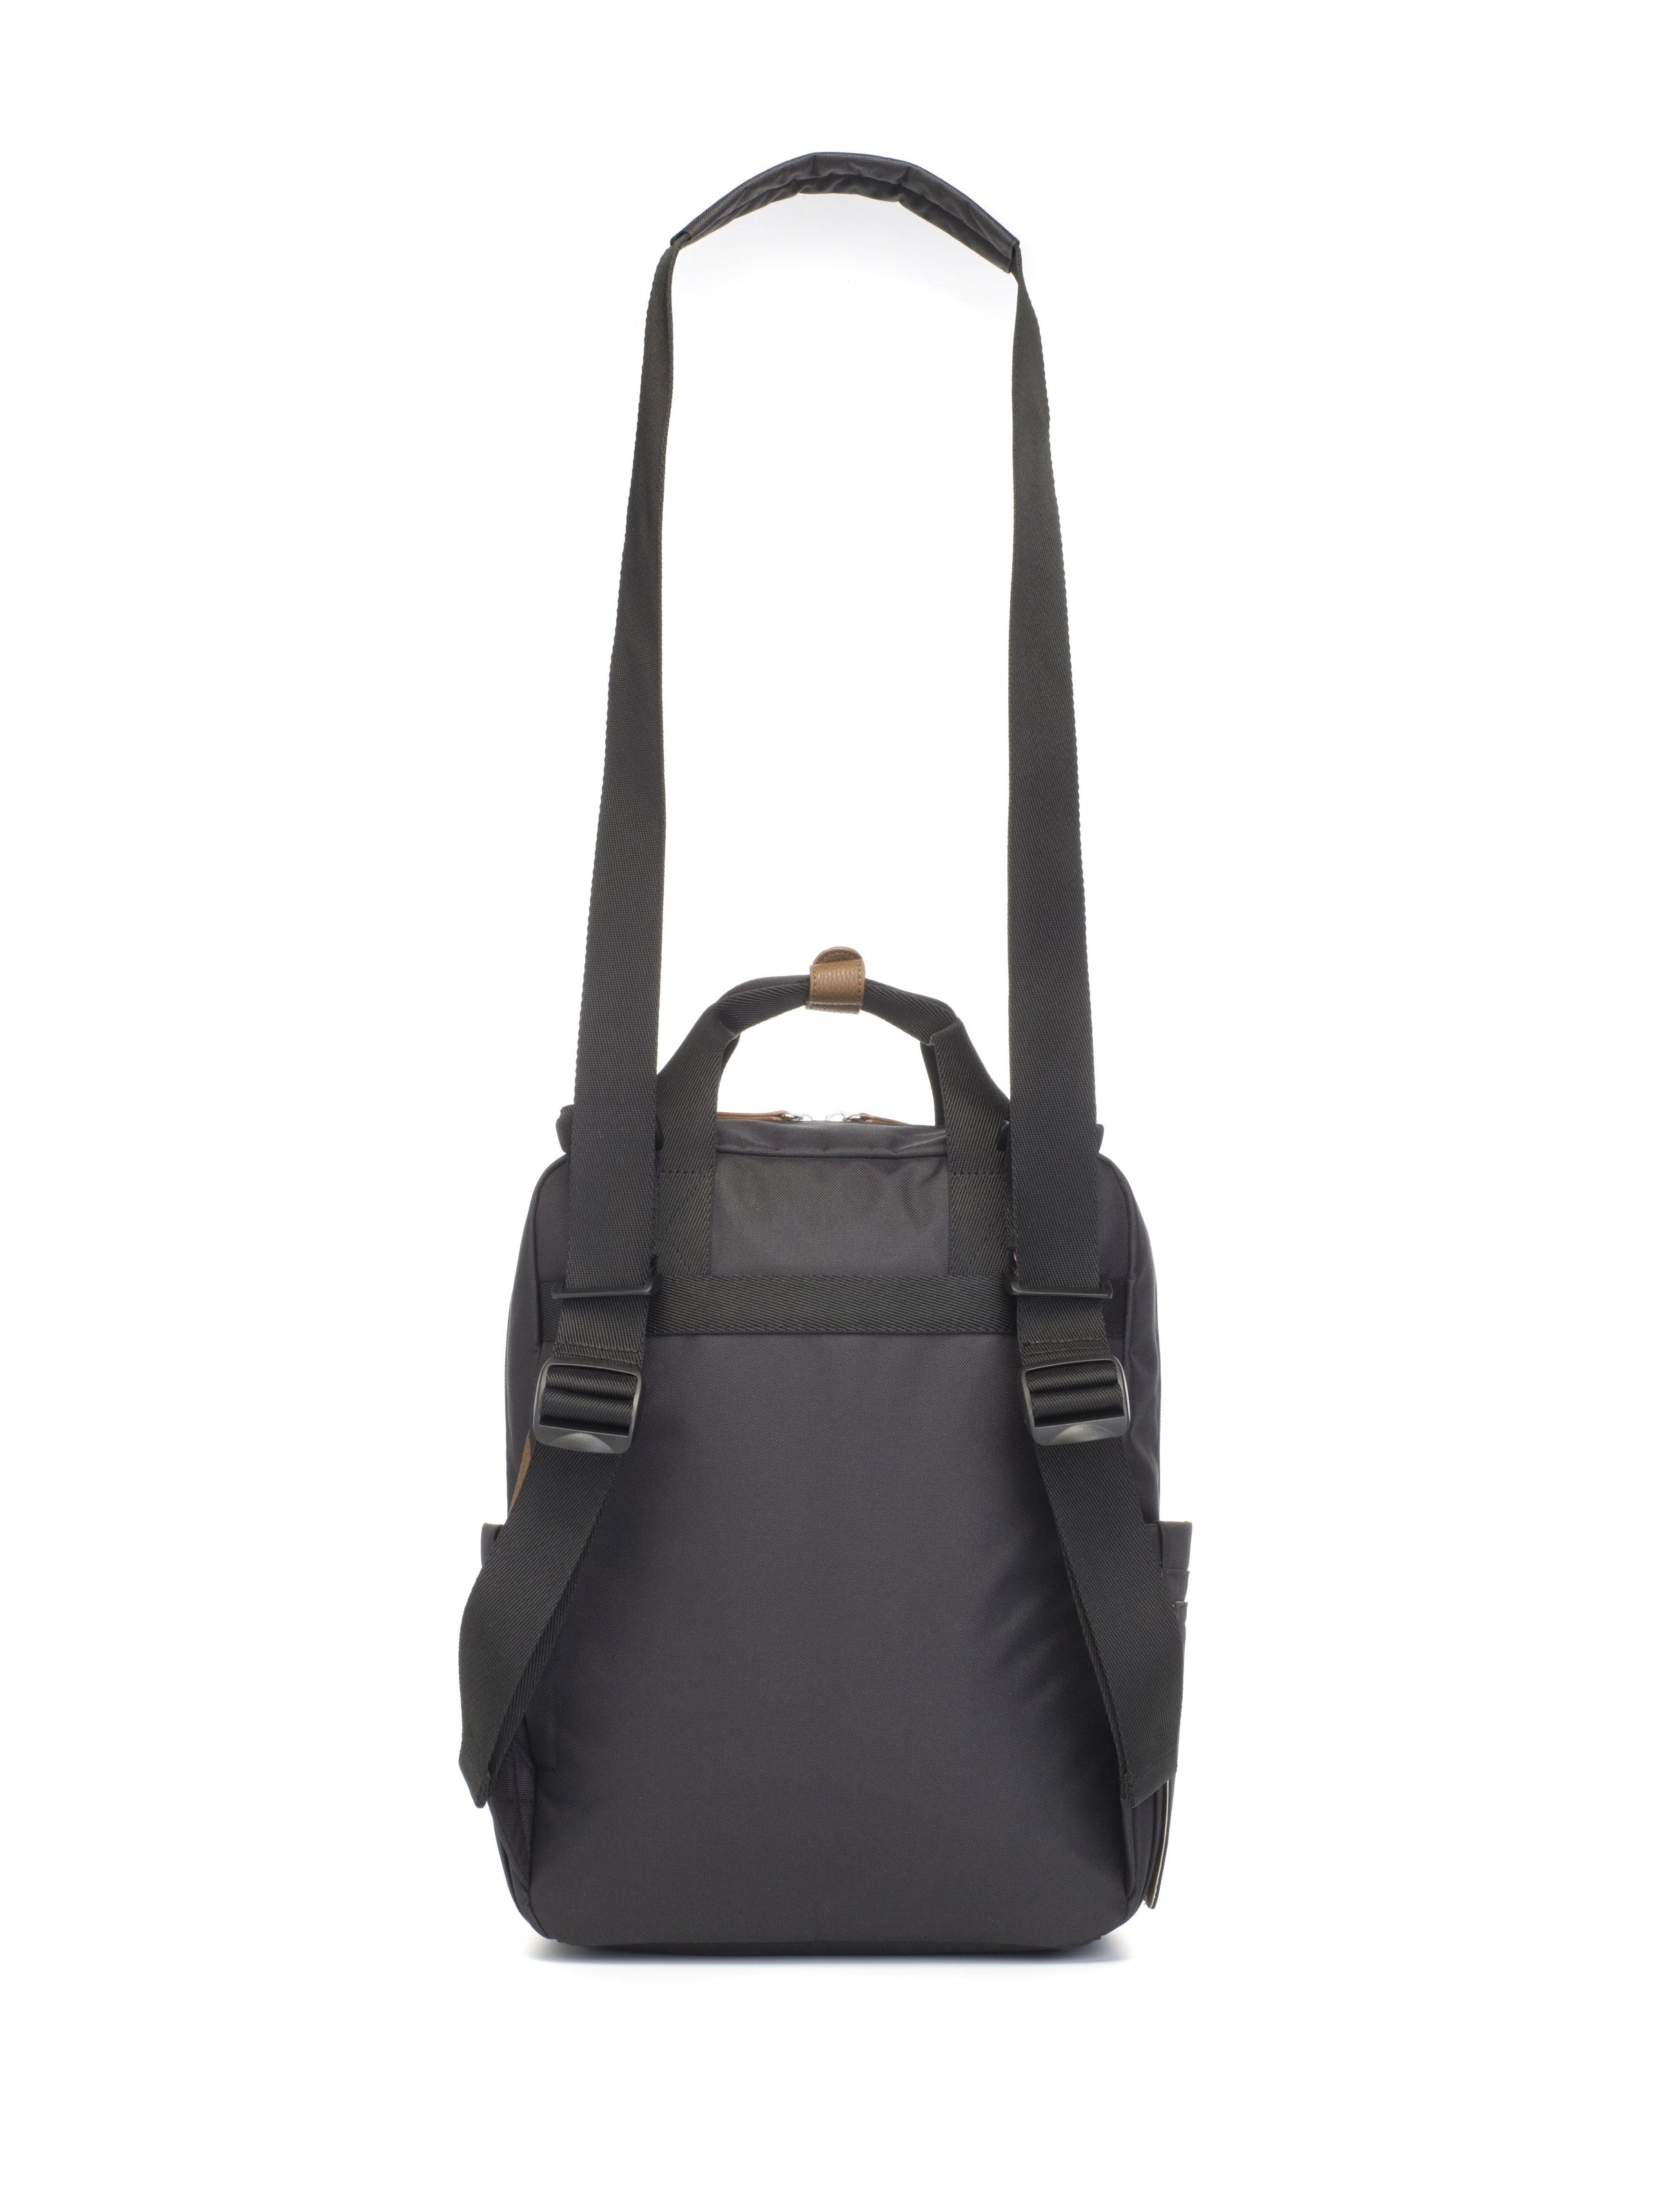 Georgie Eco Diaper Bag Backpack - Black – Project Nursery